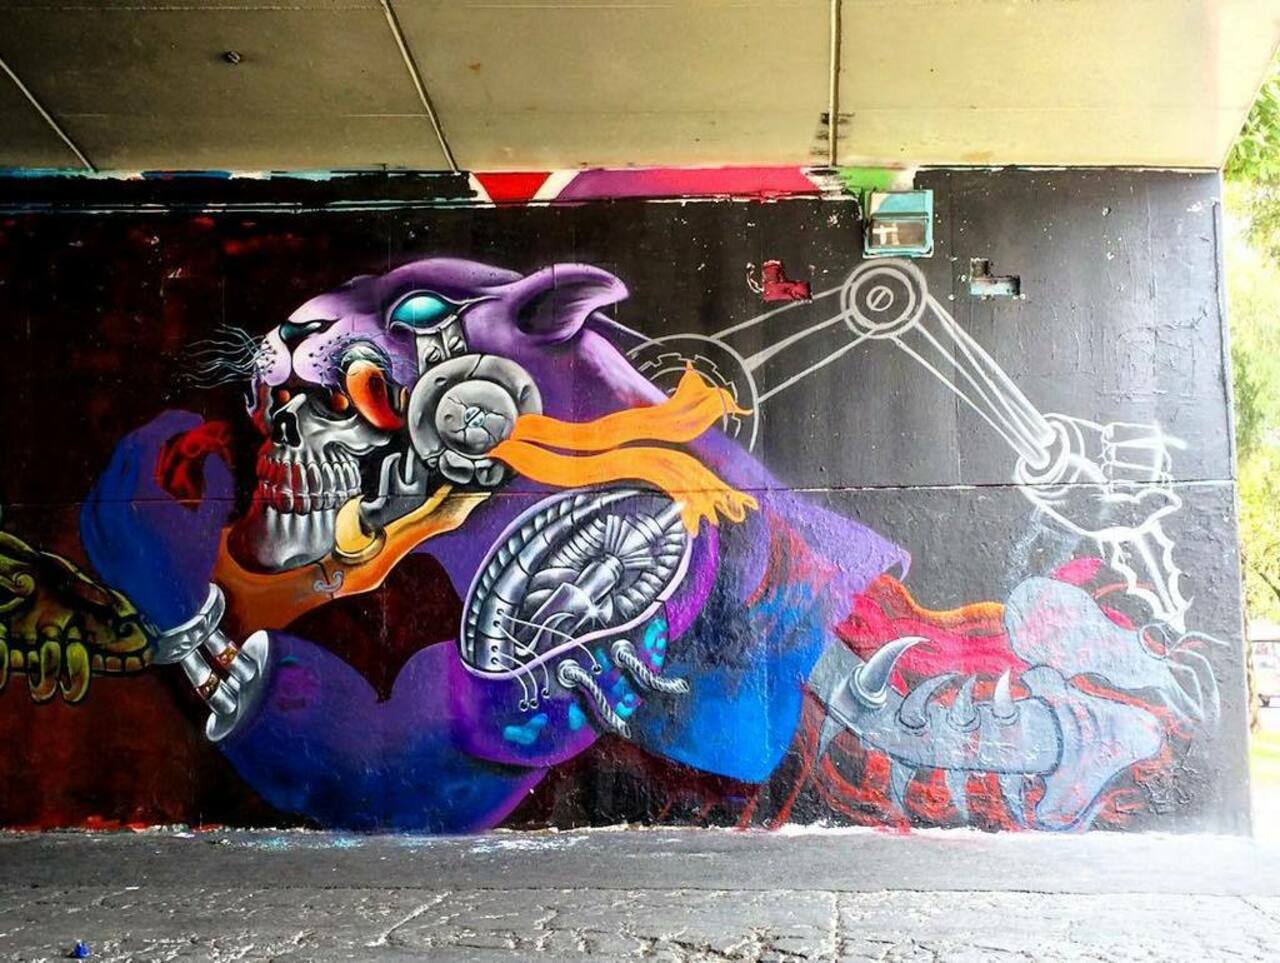 #streetart #arteurbano #urbanart #urban #art #mexico #cdmx #mexicodf #mural #graffiti #streetartmexico #urbanwalls … http://t.co/13oAd28hQe